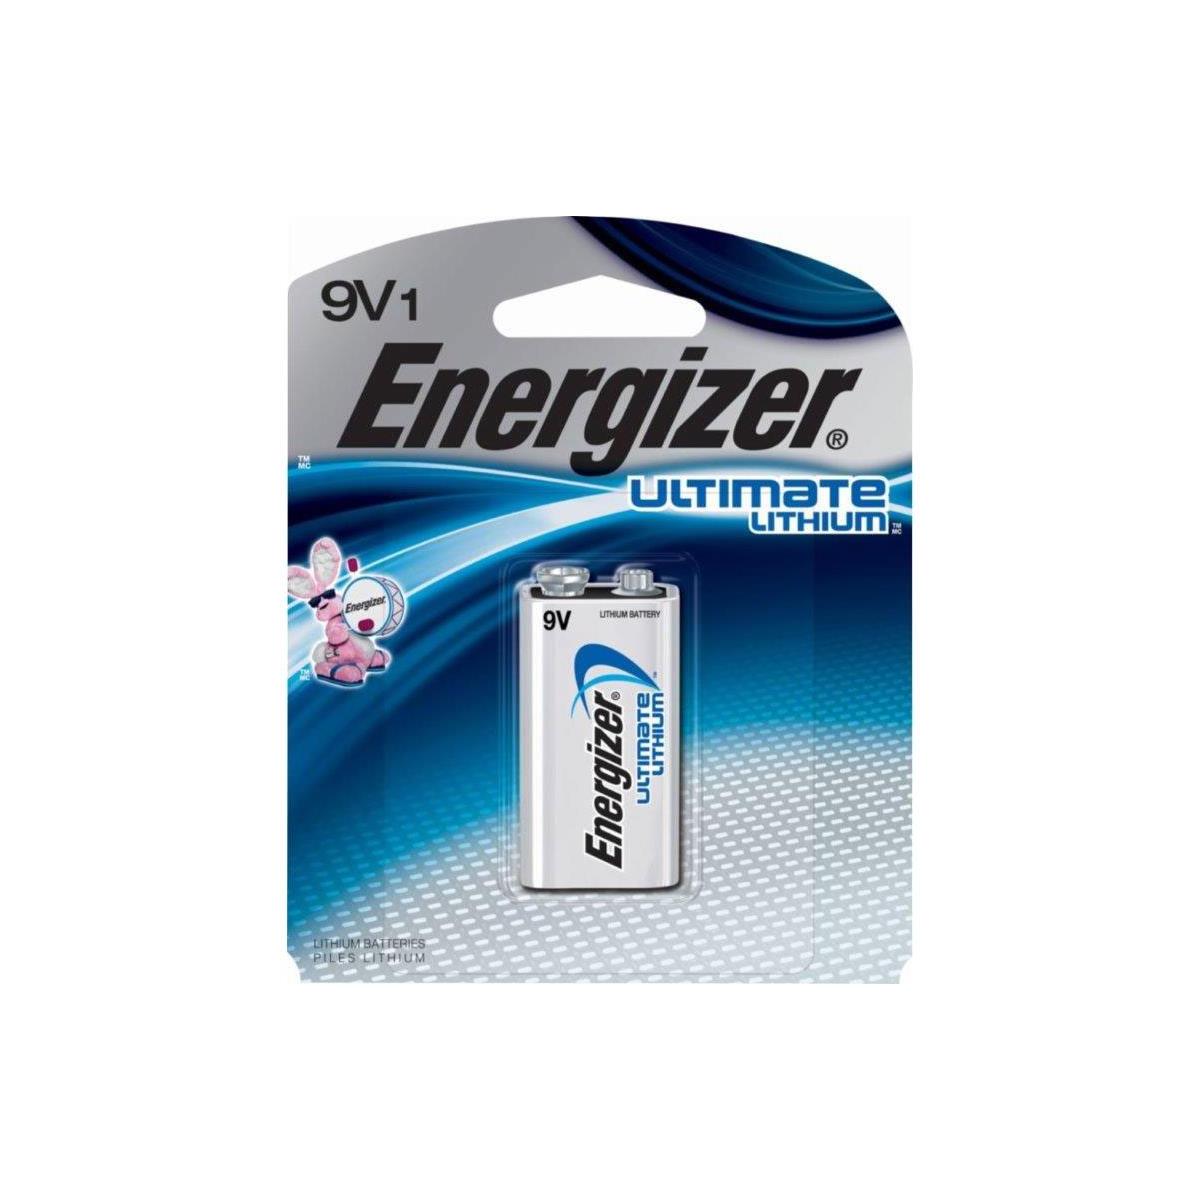 Image of Energizer 9V Ultimate Lithium Battery